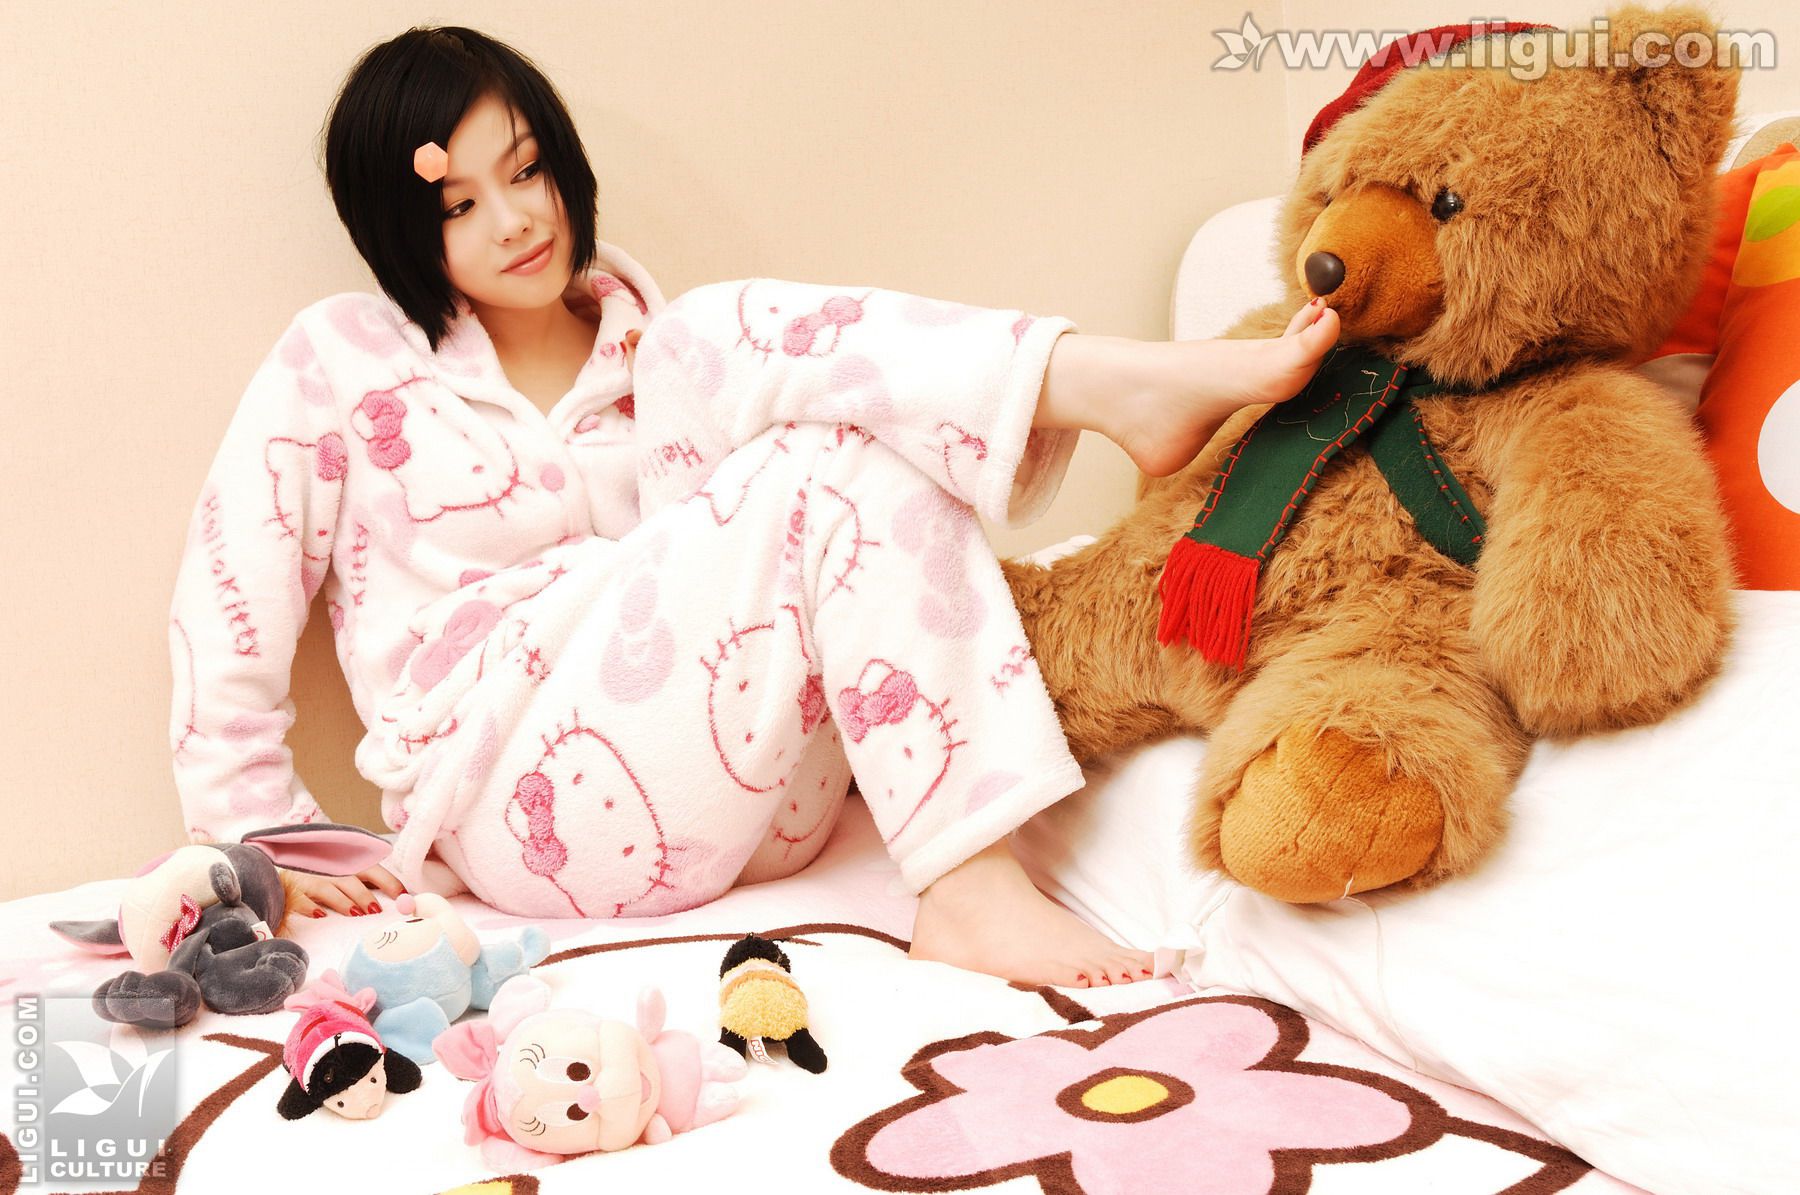 Model Muzi “Foot Show in Cute Pajamas” [丽柜LiGui] Photo pictures of beautiful feet in stockings